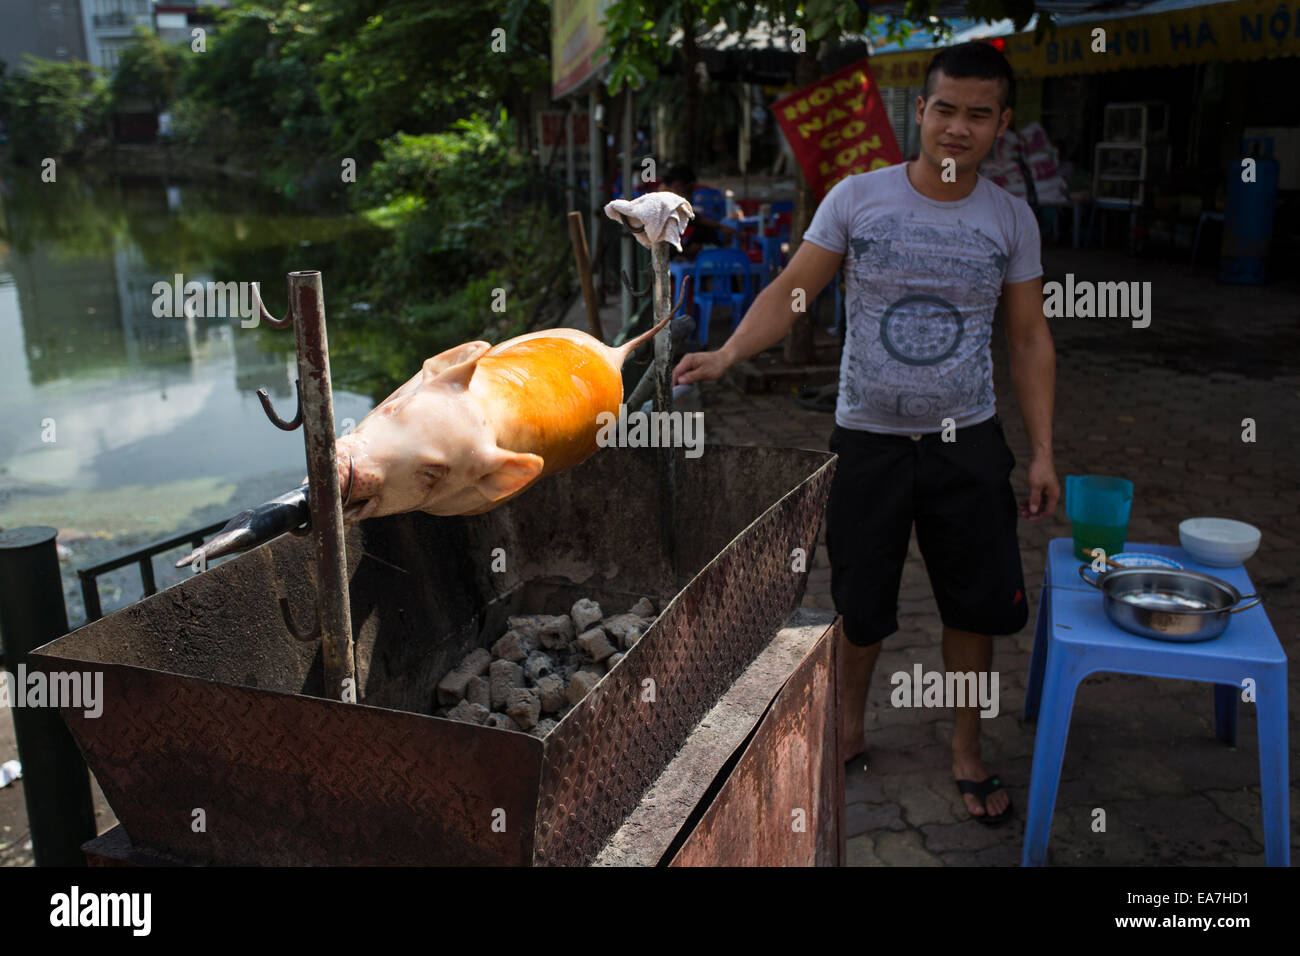 Man Roasts Pig on Road in Hanoi, Vietnam Stock Photo